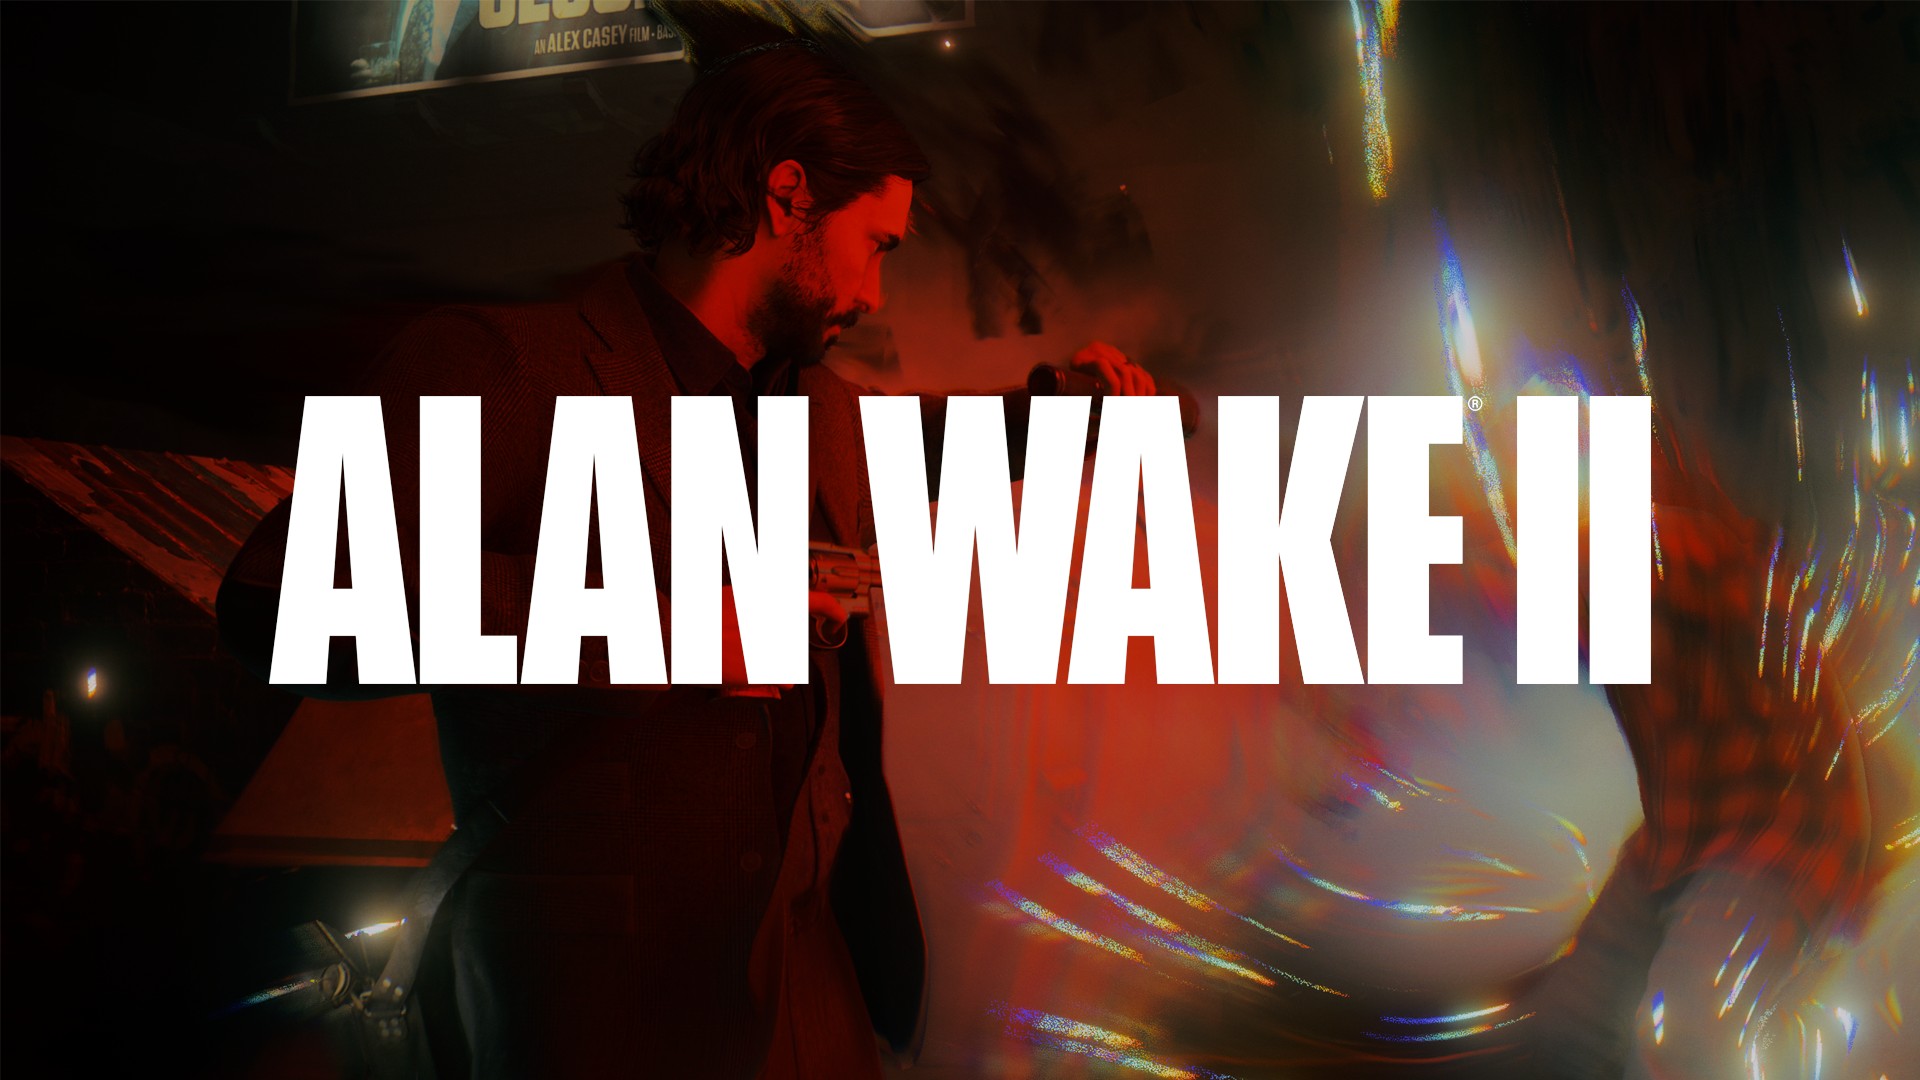 Alan Wake II - Review Thread